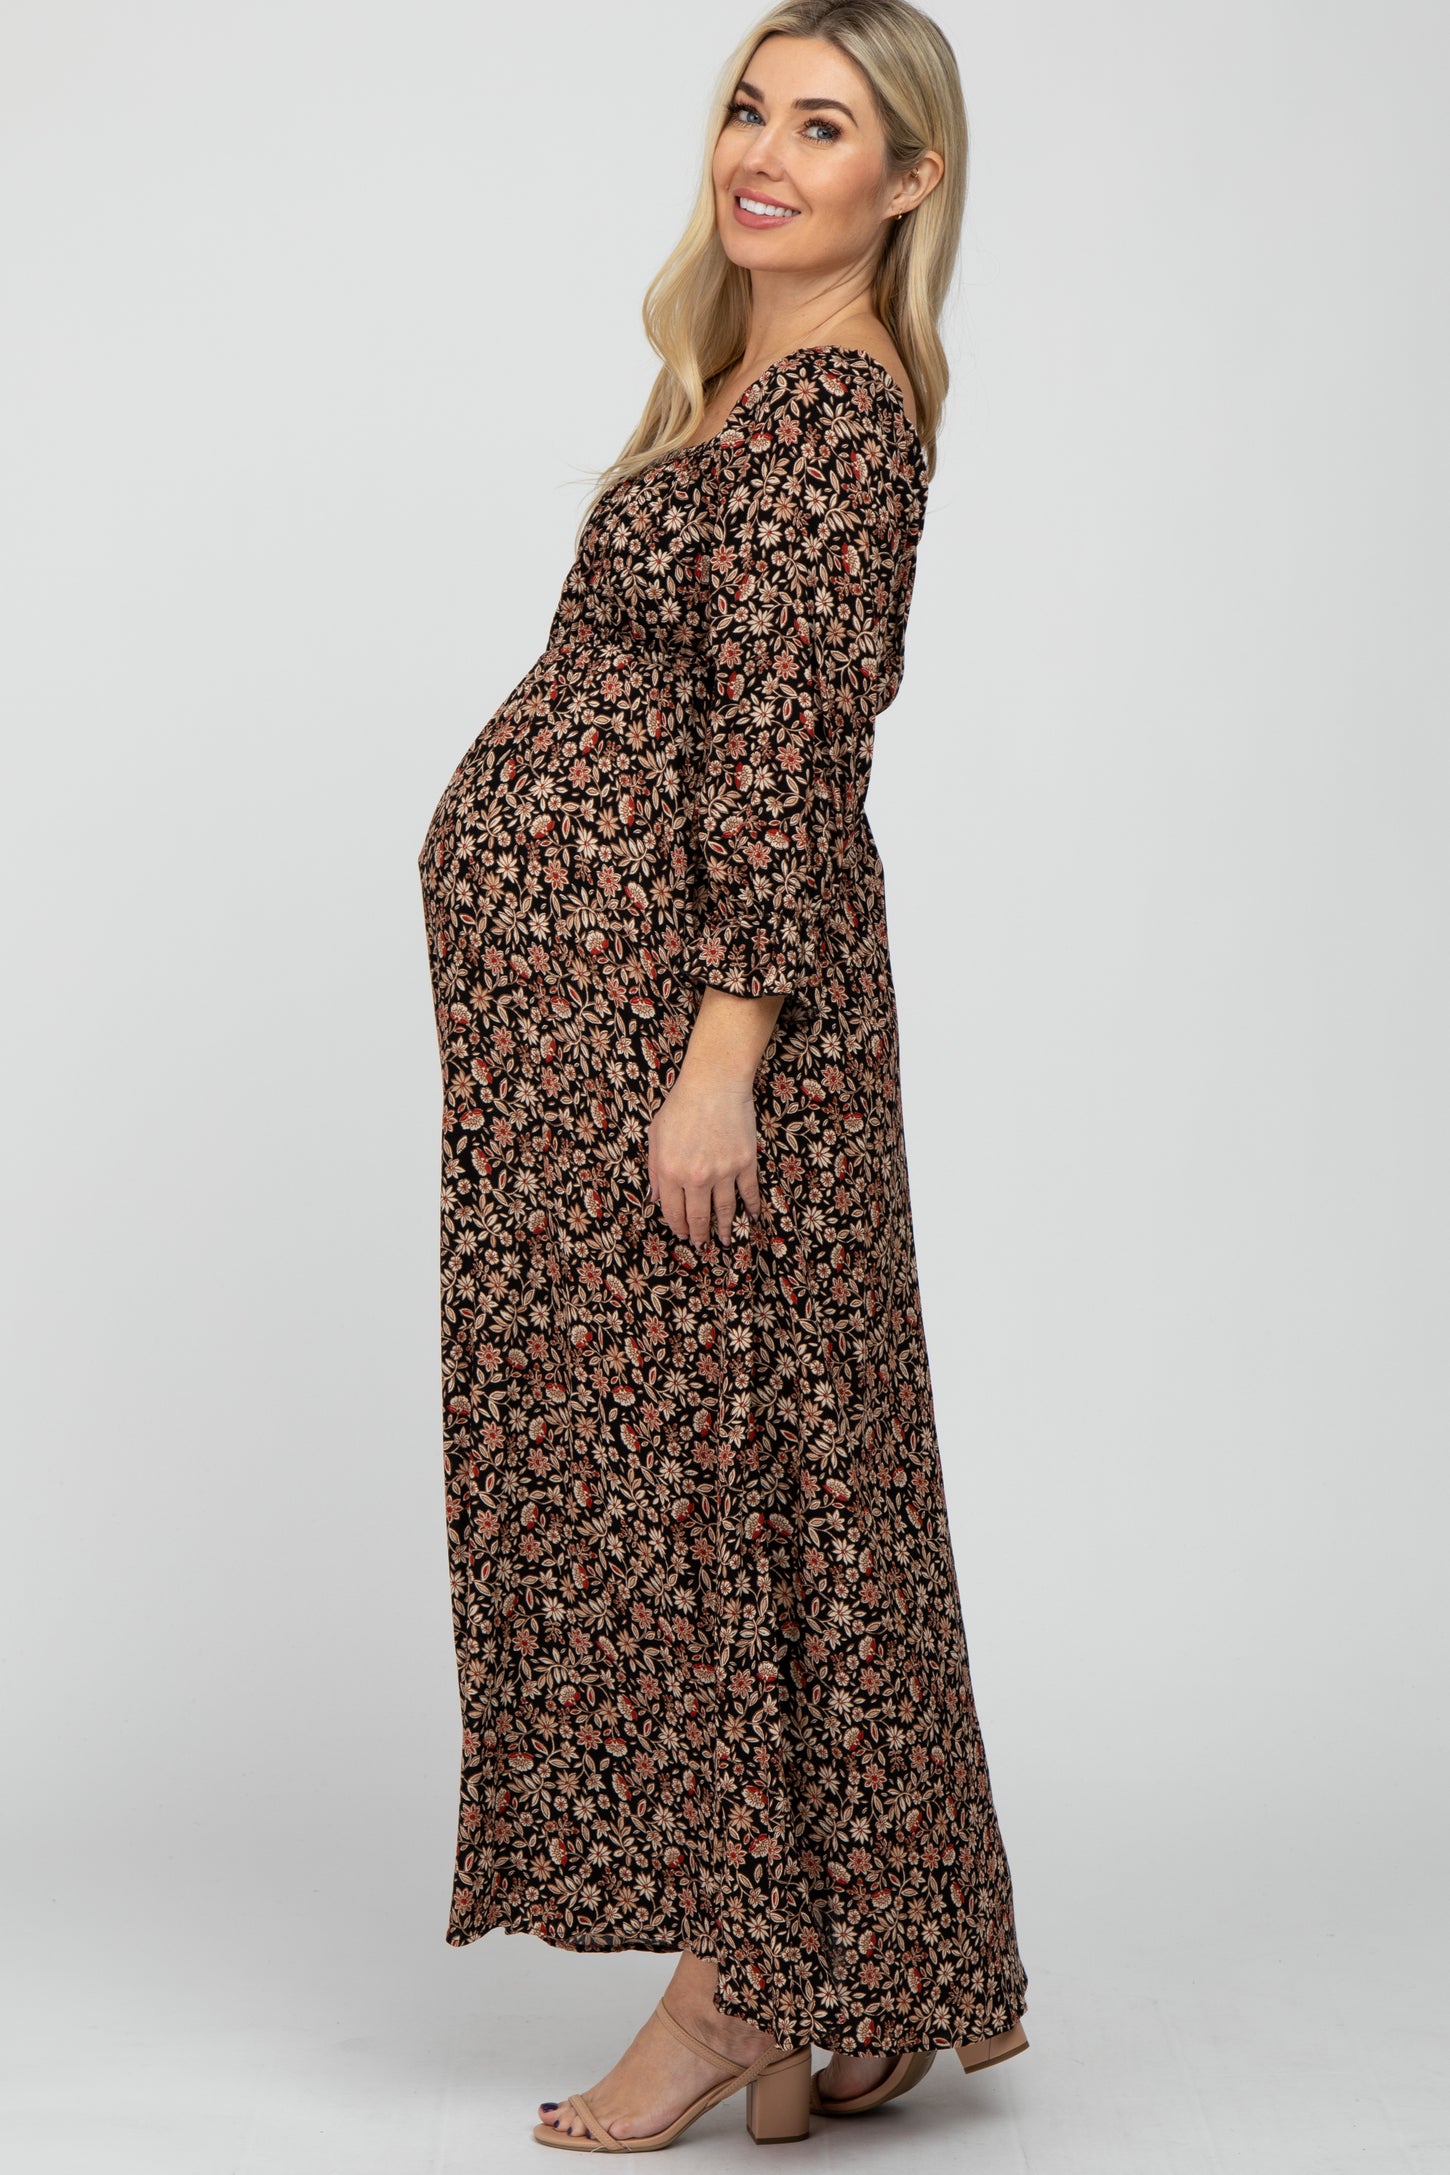 Black Floral Maternity Maxi Dress